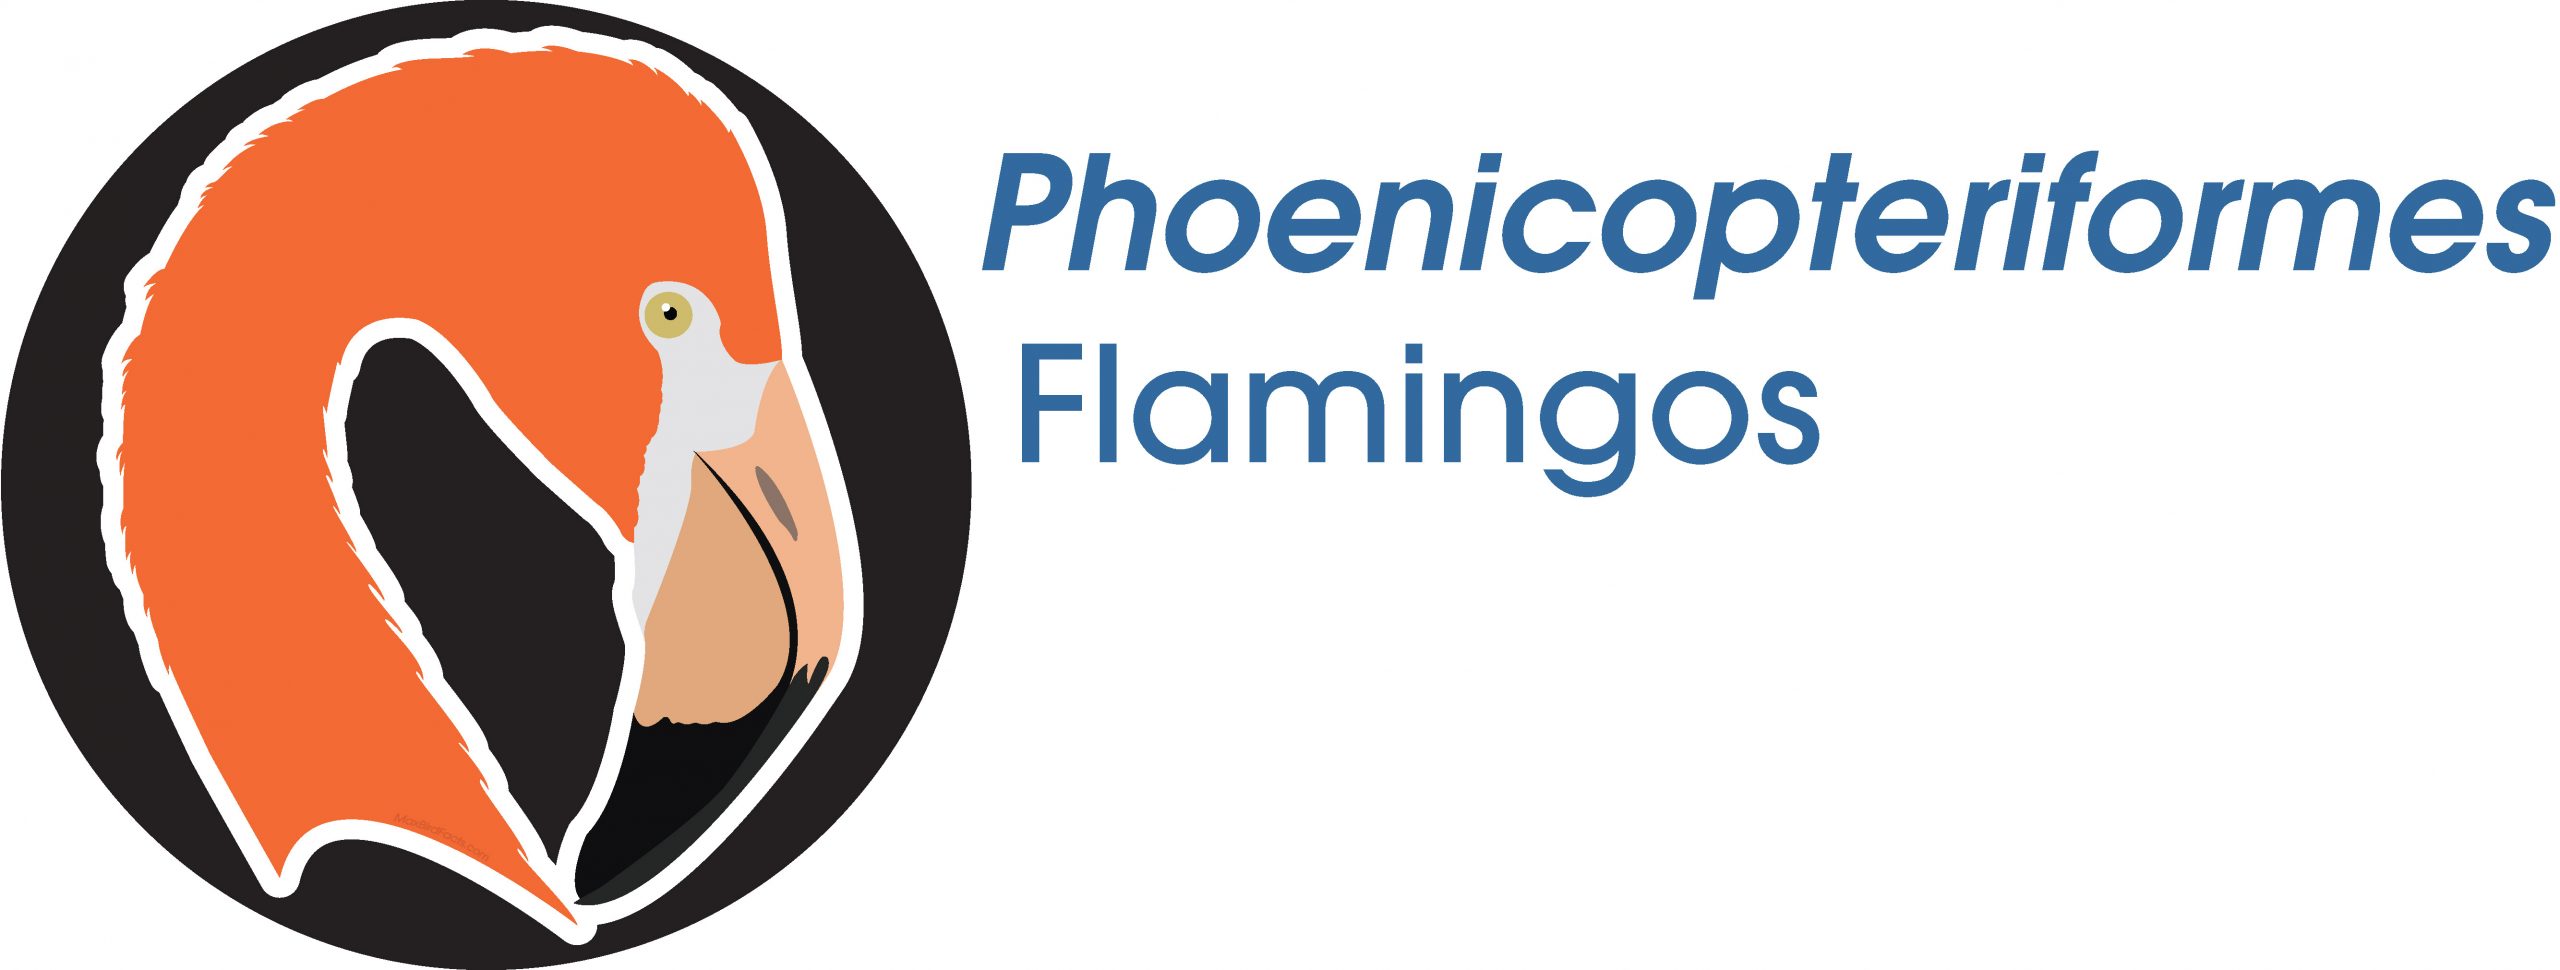 Phoenicopteriformes
Flamingos
American Flamingo